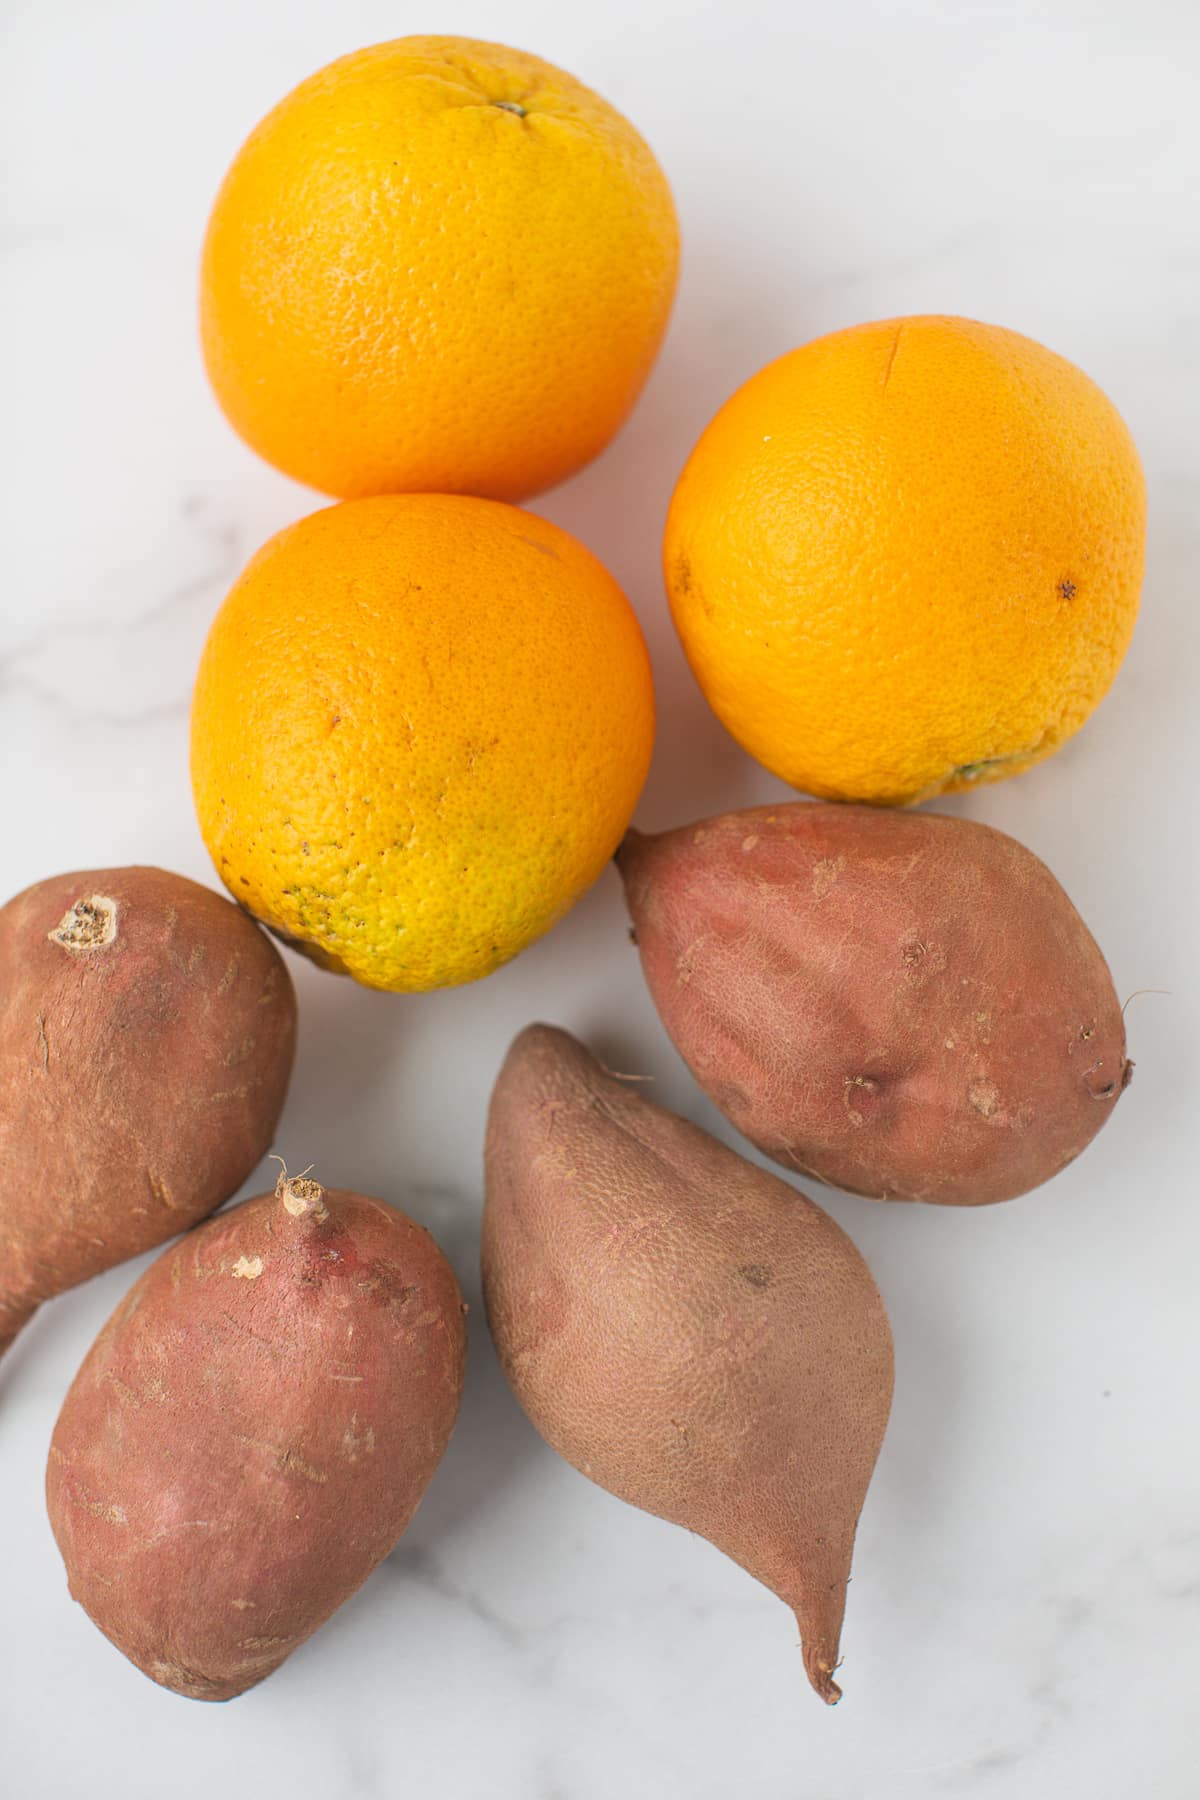 orangea and sweet potatoes for recipe